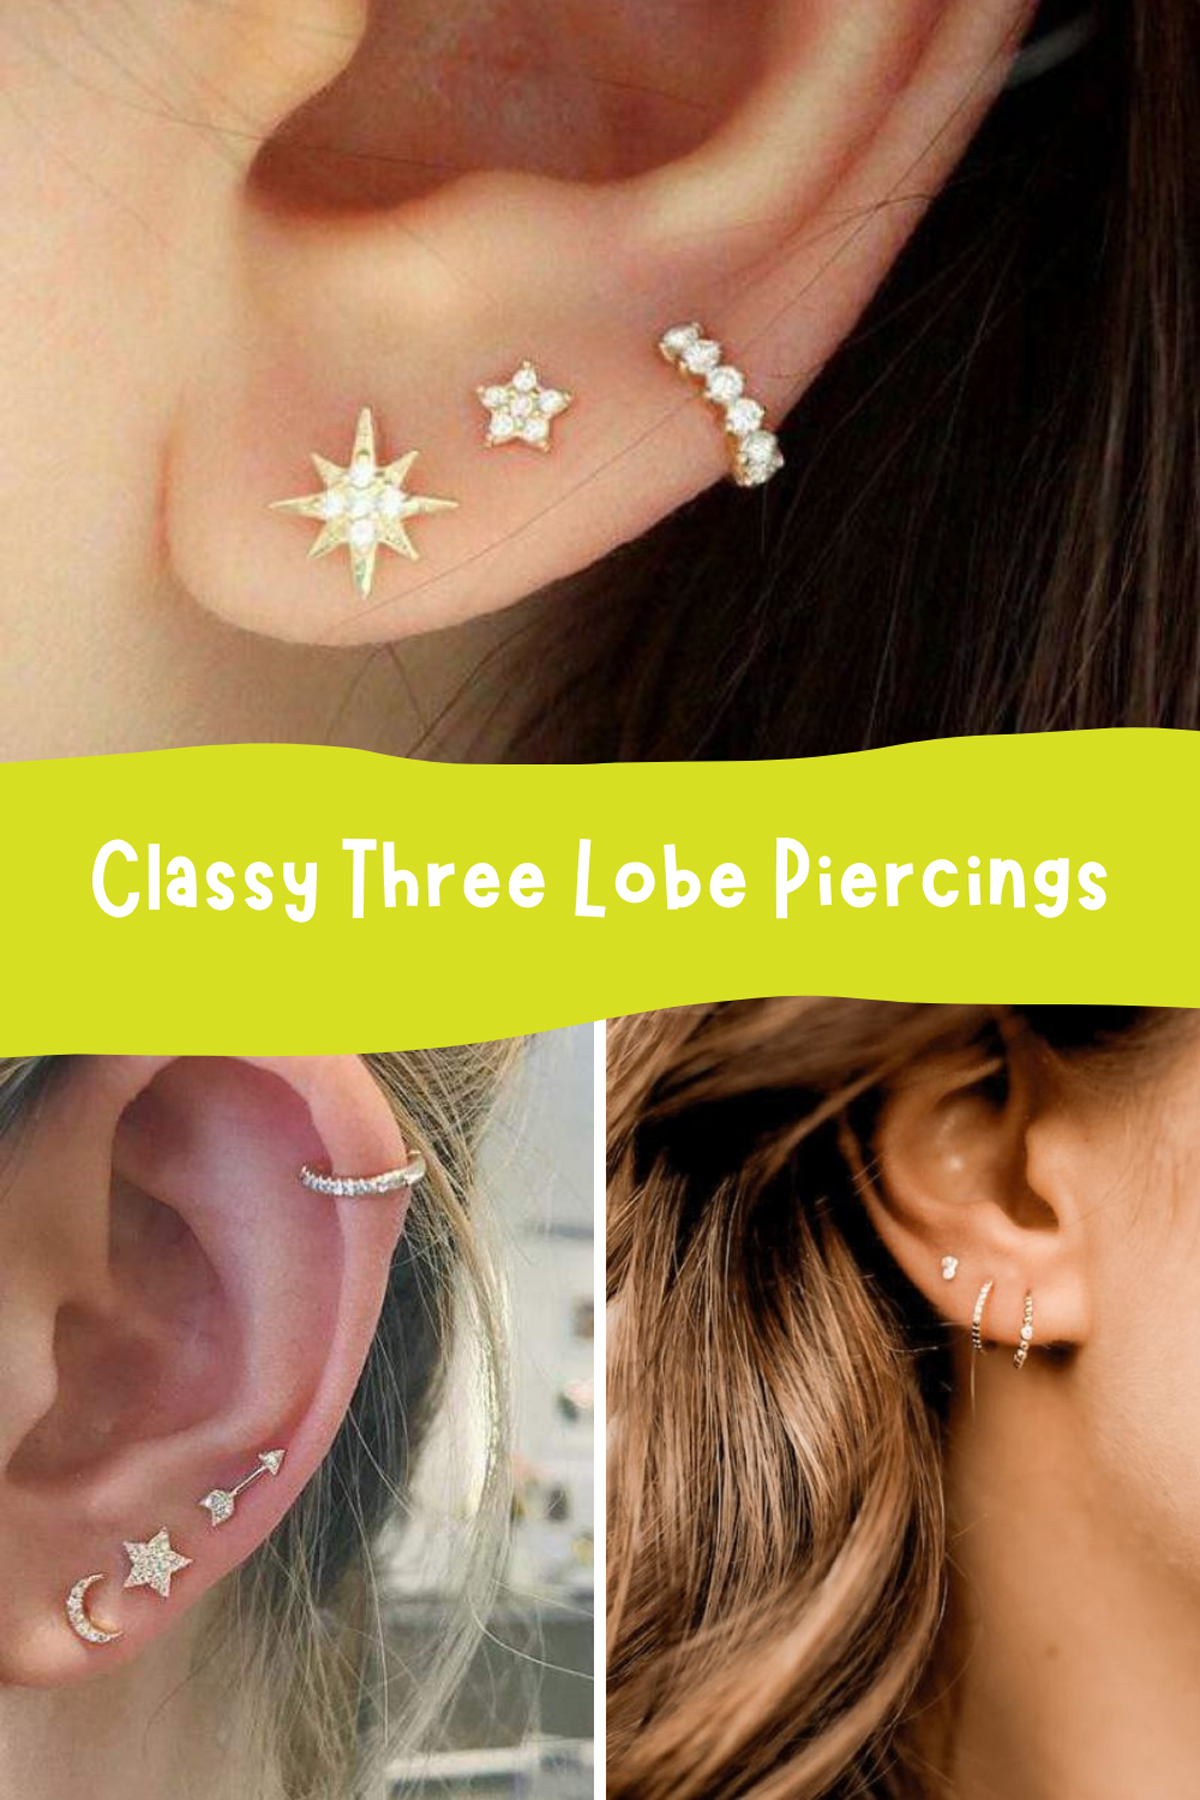 Classy Three Lobe Piercings